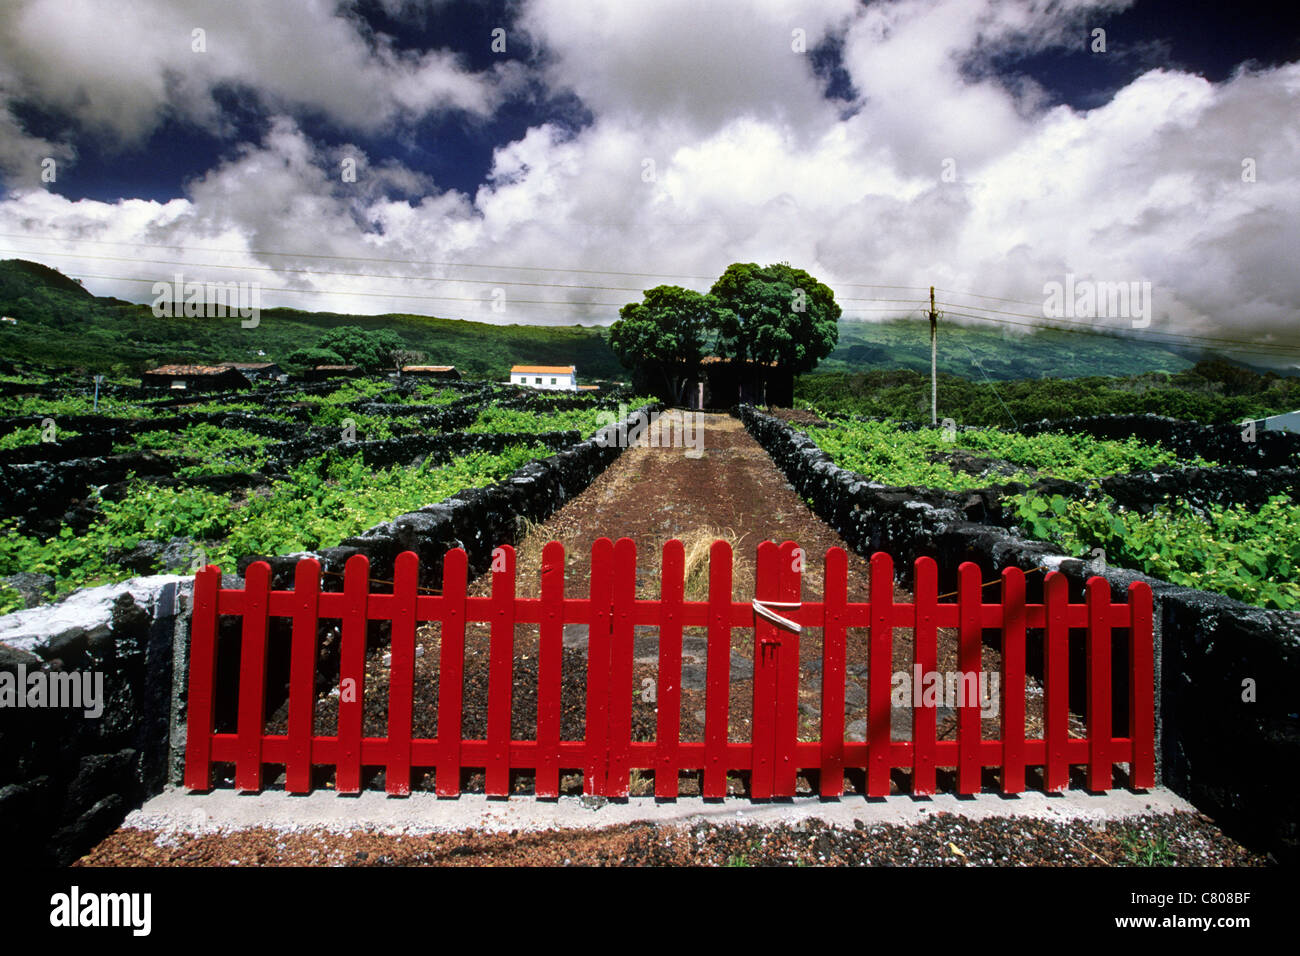 Azores, Pico Island, vineyards gate Stock Photo